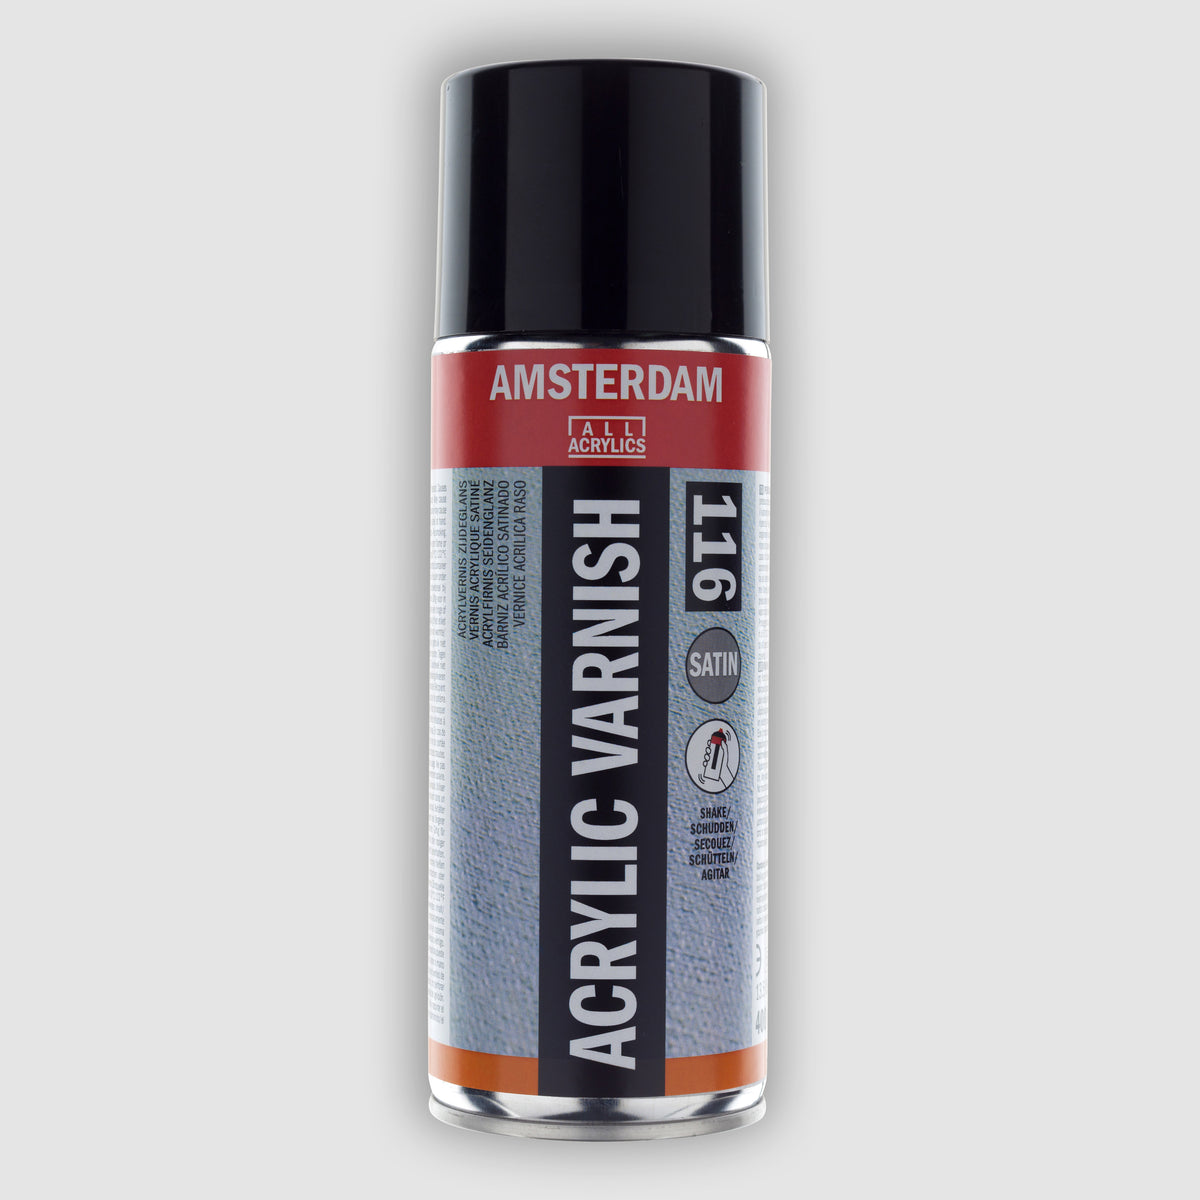 Amsterdam acrylic varnish satin gloss 400ml